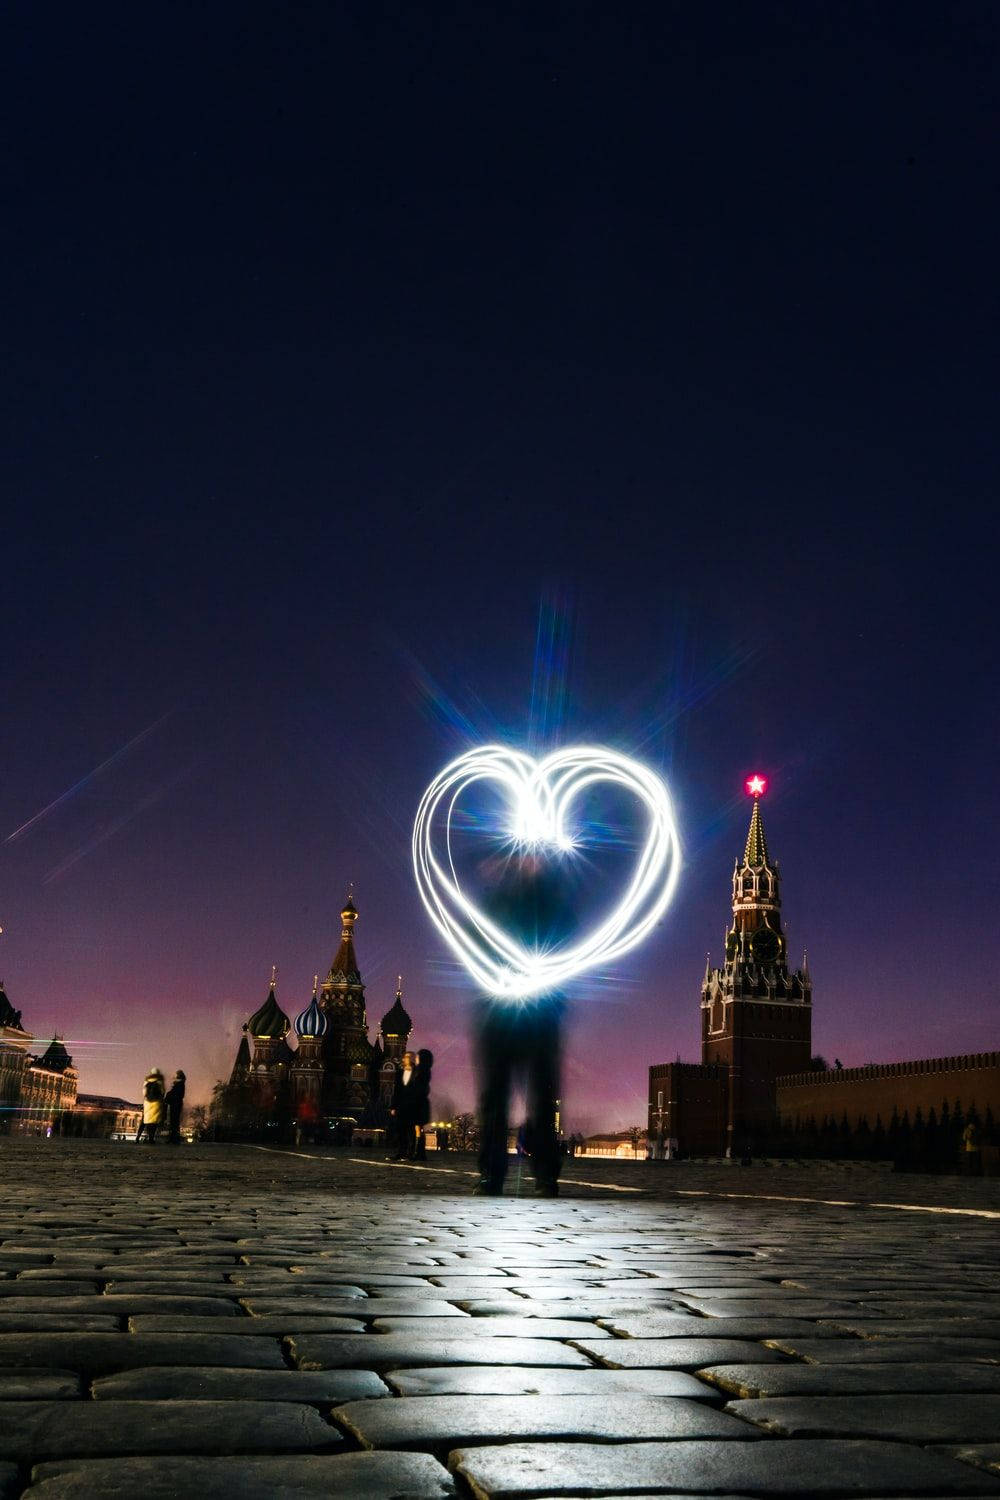 Caption: Illuminated Heart On Indie Phone Wallpaper